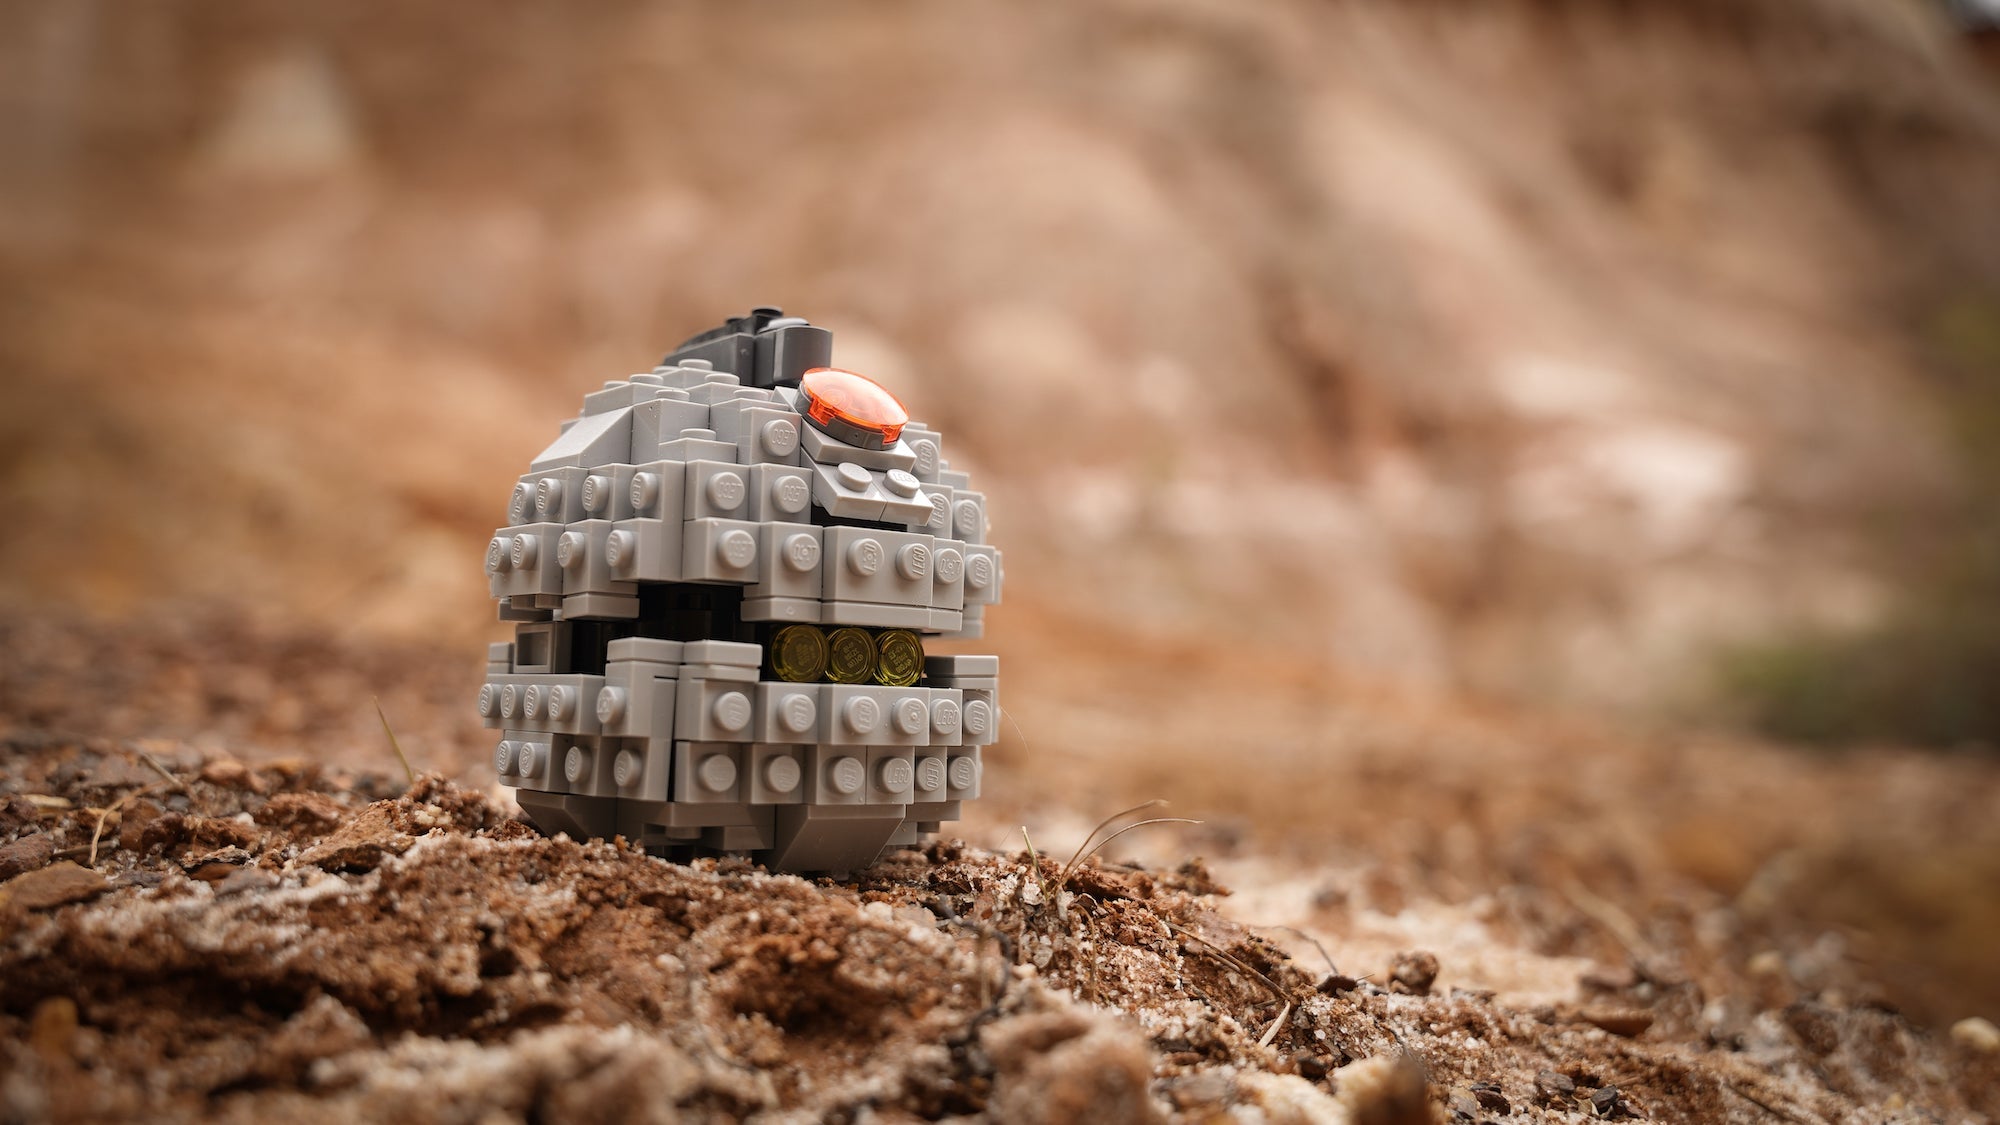 thermal detonator life sized replica built with lego bricks in desert sands